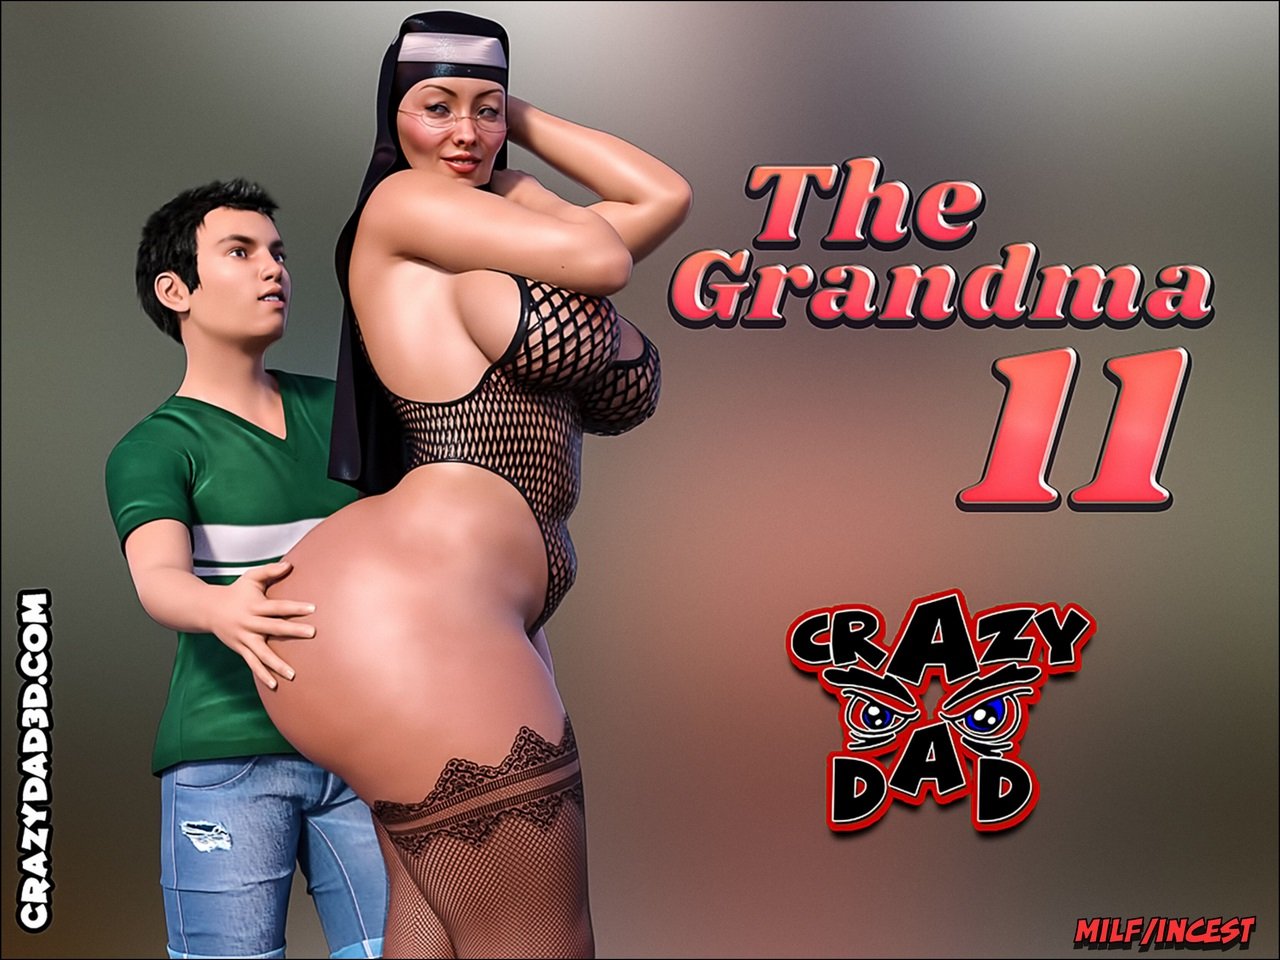 Crazydad3d The Grandma Incest Sex